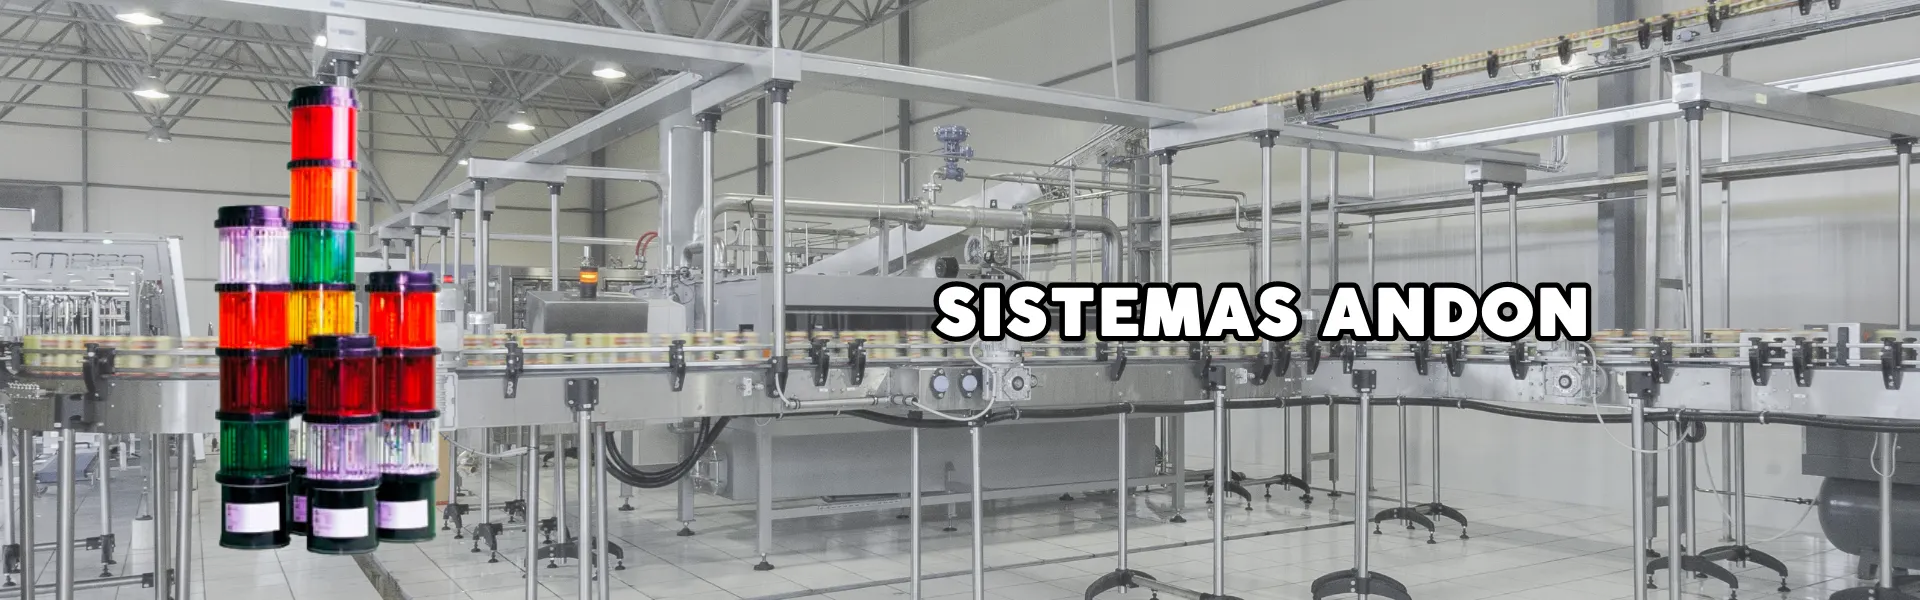 Sistemas andon para uso industrial